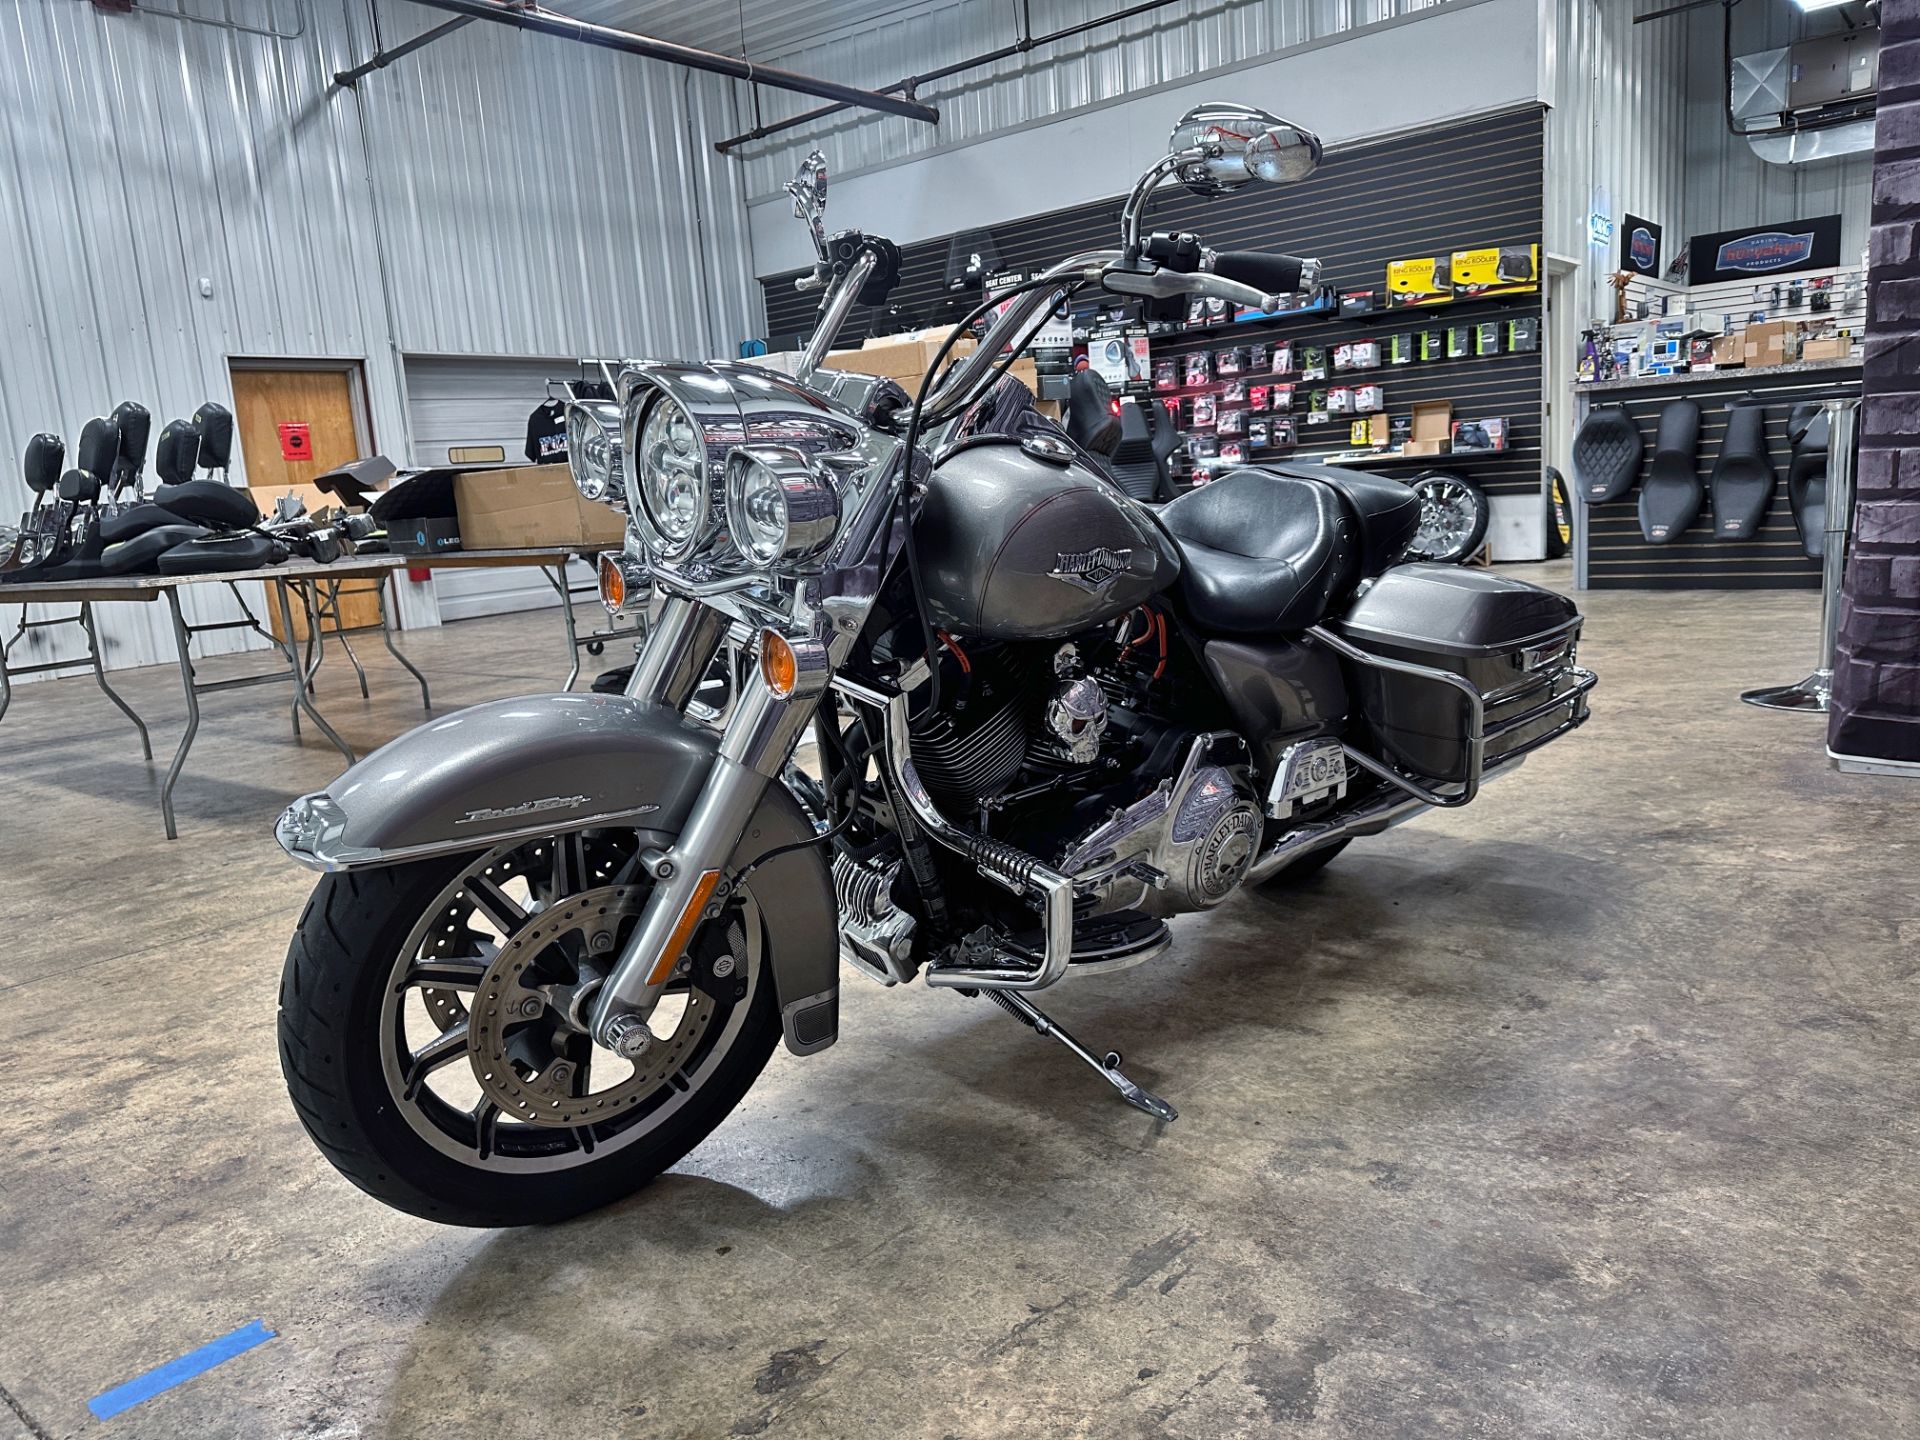 2016 Harley-Davidson Road King® in Sandusky, Ohio - Photo 5